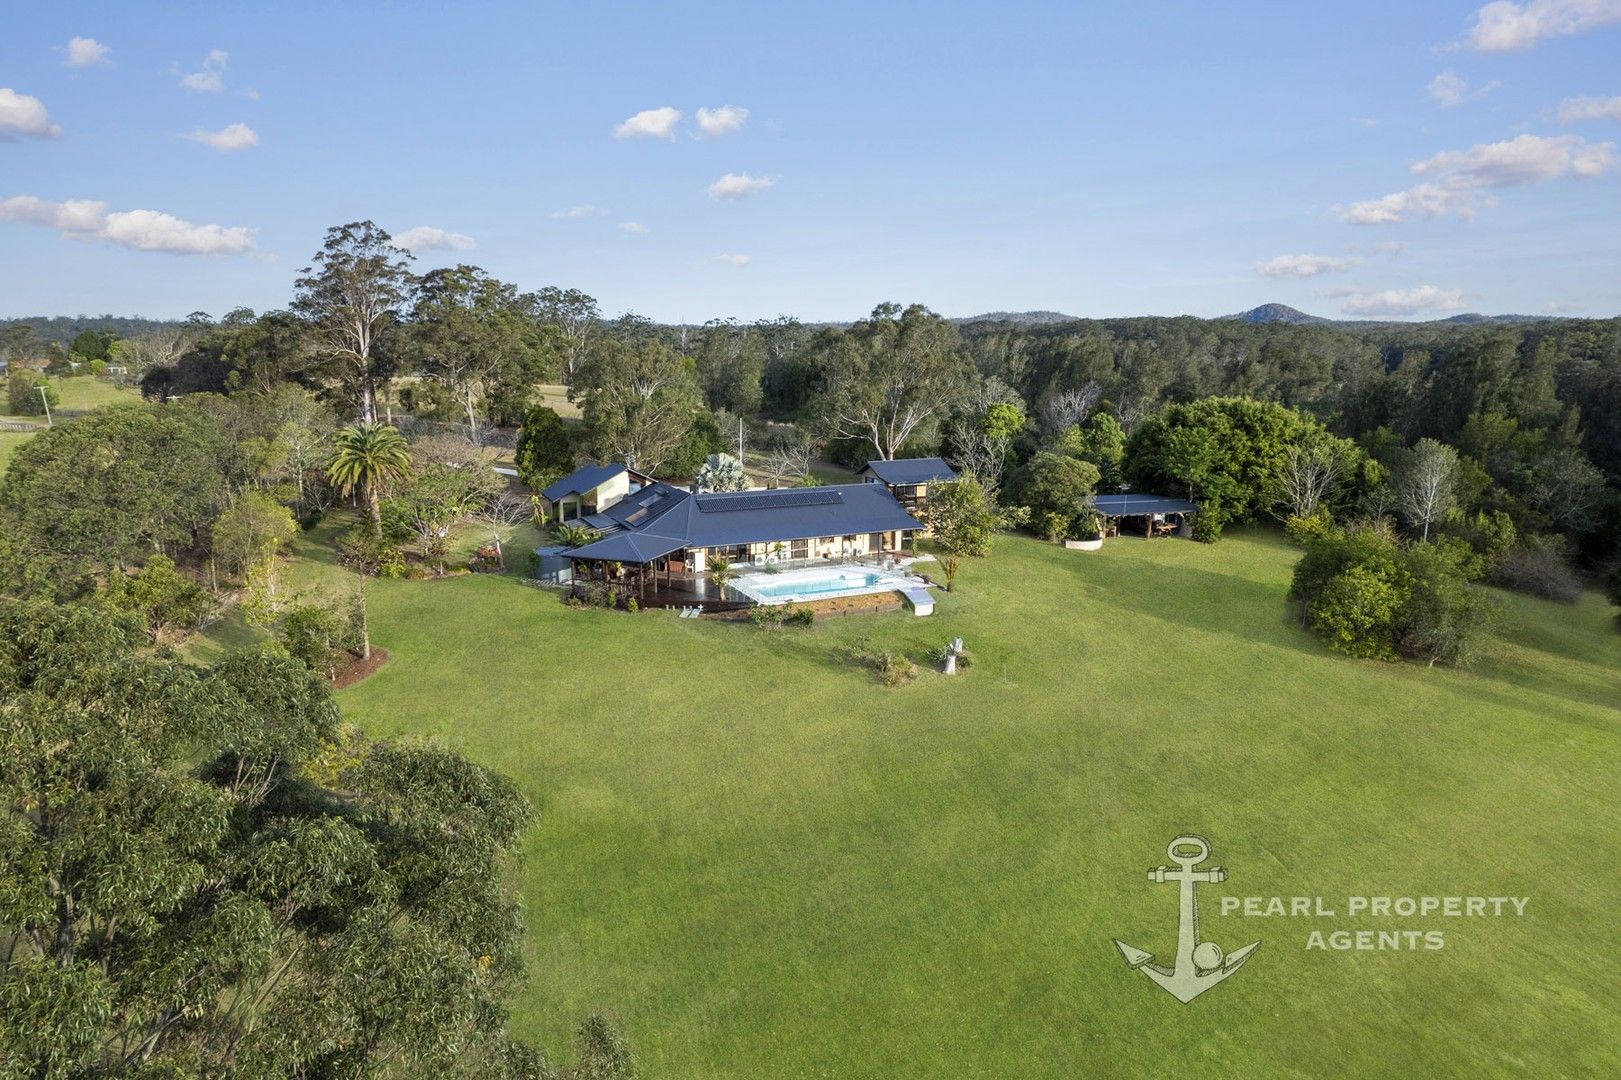 4 bedrooms Acreage / Semi-Rural in  KING CREEK NSW, 2446